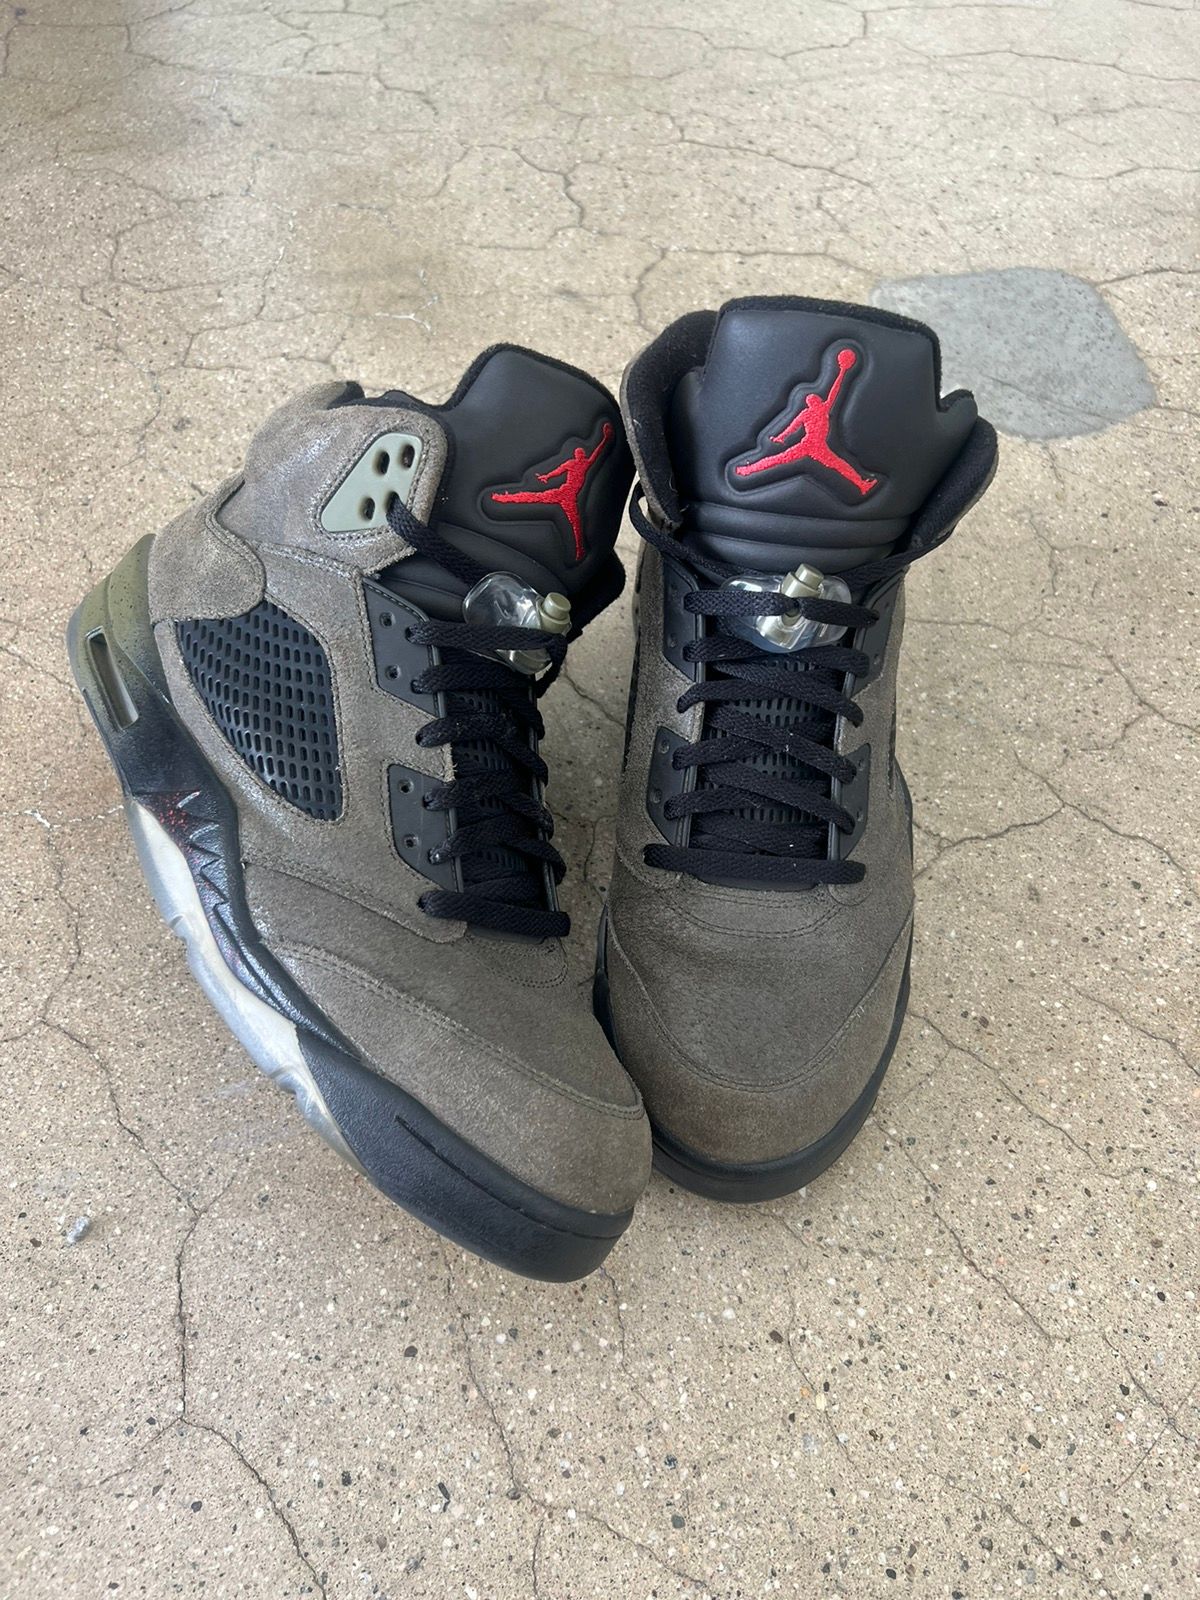 Pre-owned Jordan Brand Air Jordan 5 Fear Pack Shoes In Dark Olive